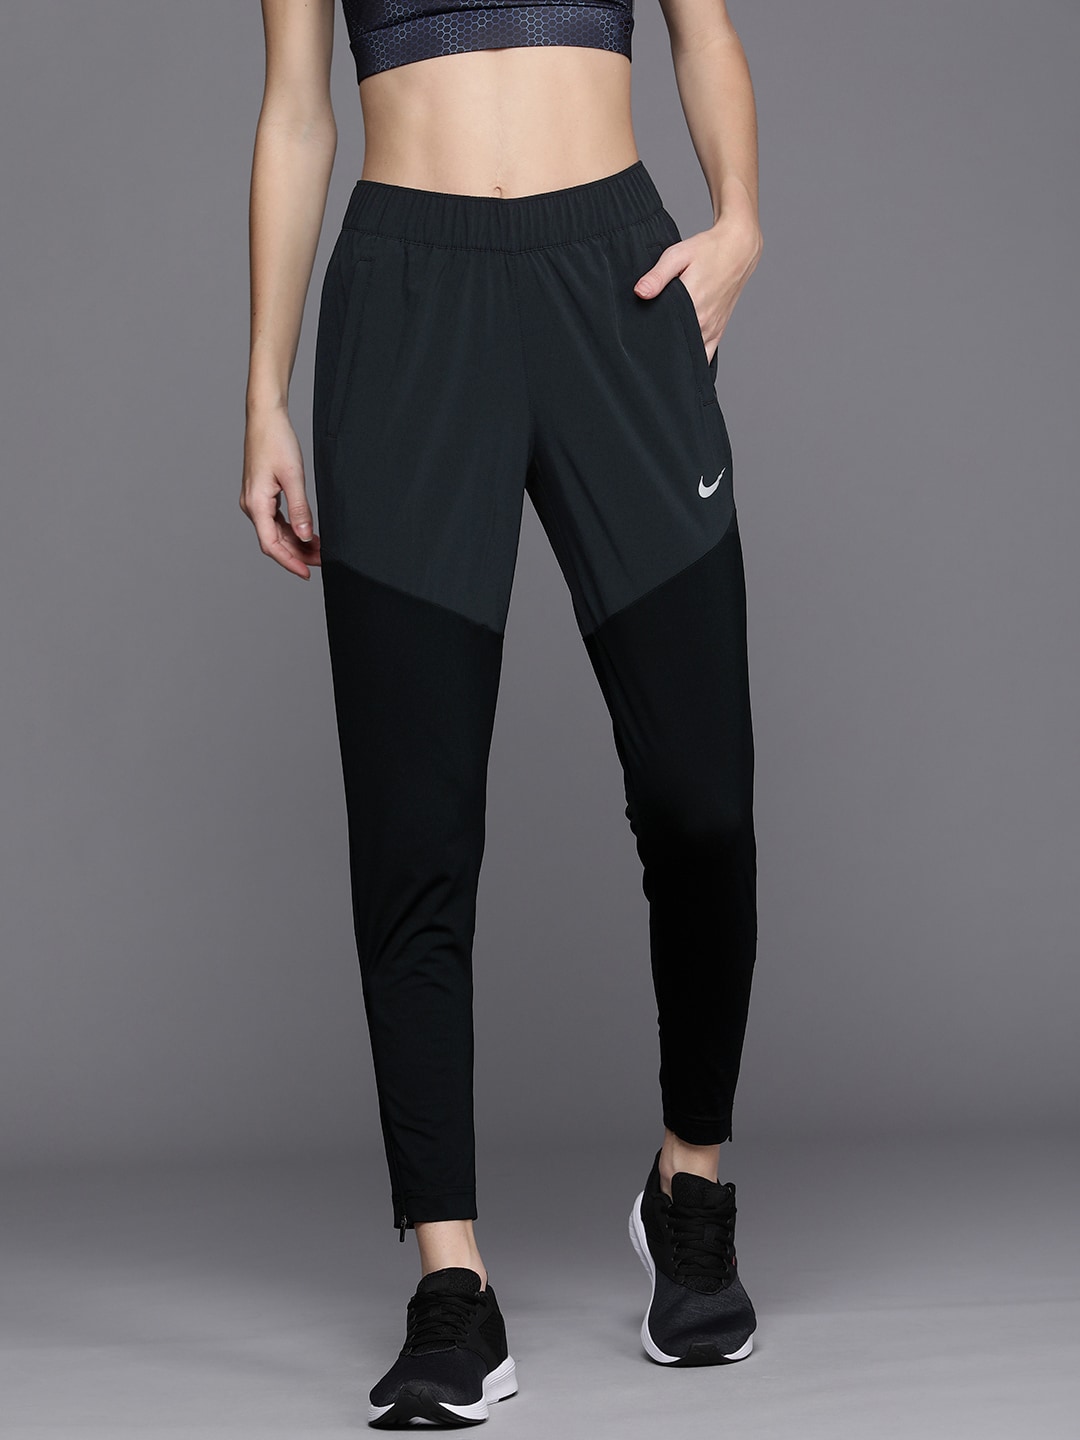 Nike Women Black Dry-Fit Slim Fit Track Pants Price in India